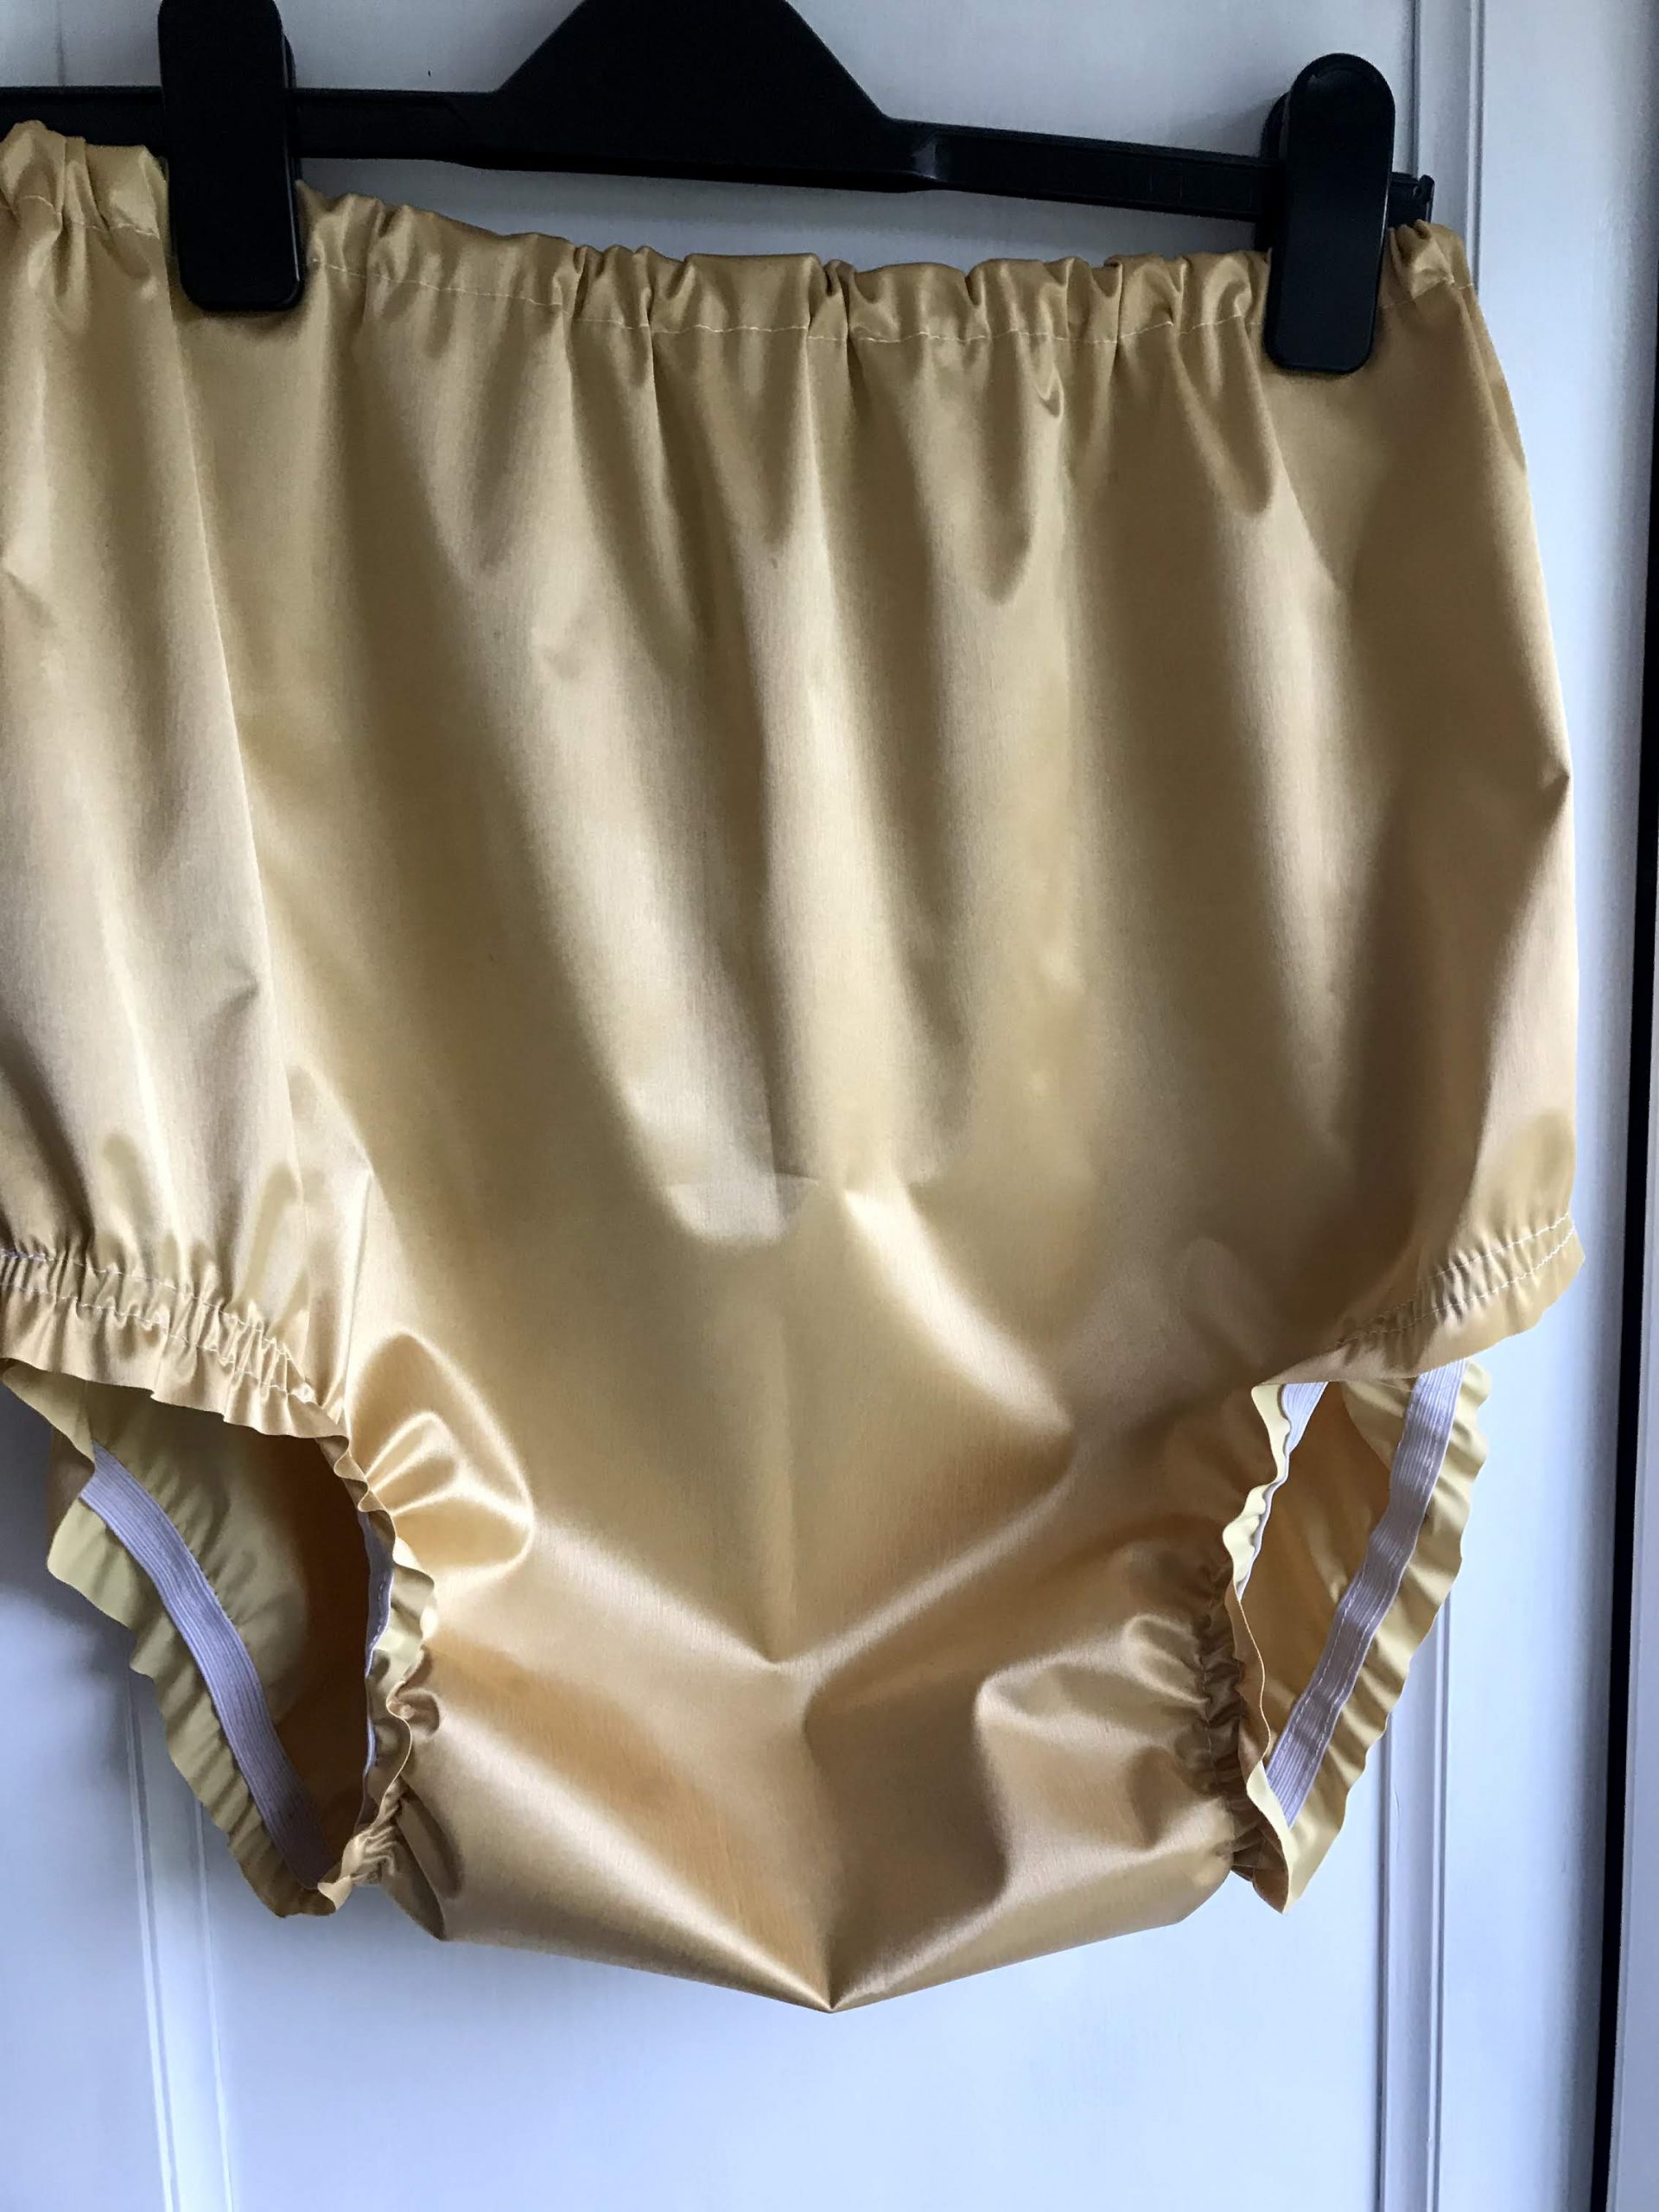 Gold satin rubber lined Incontinence pants - Hamilton Classics